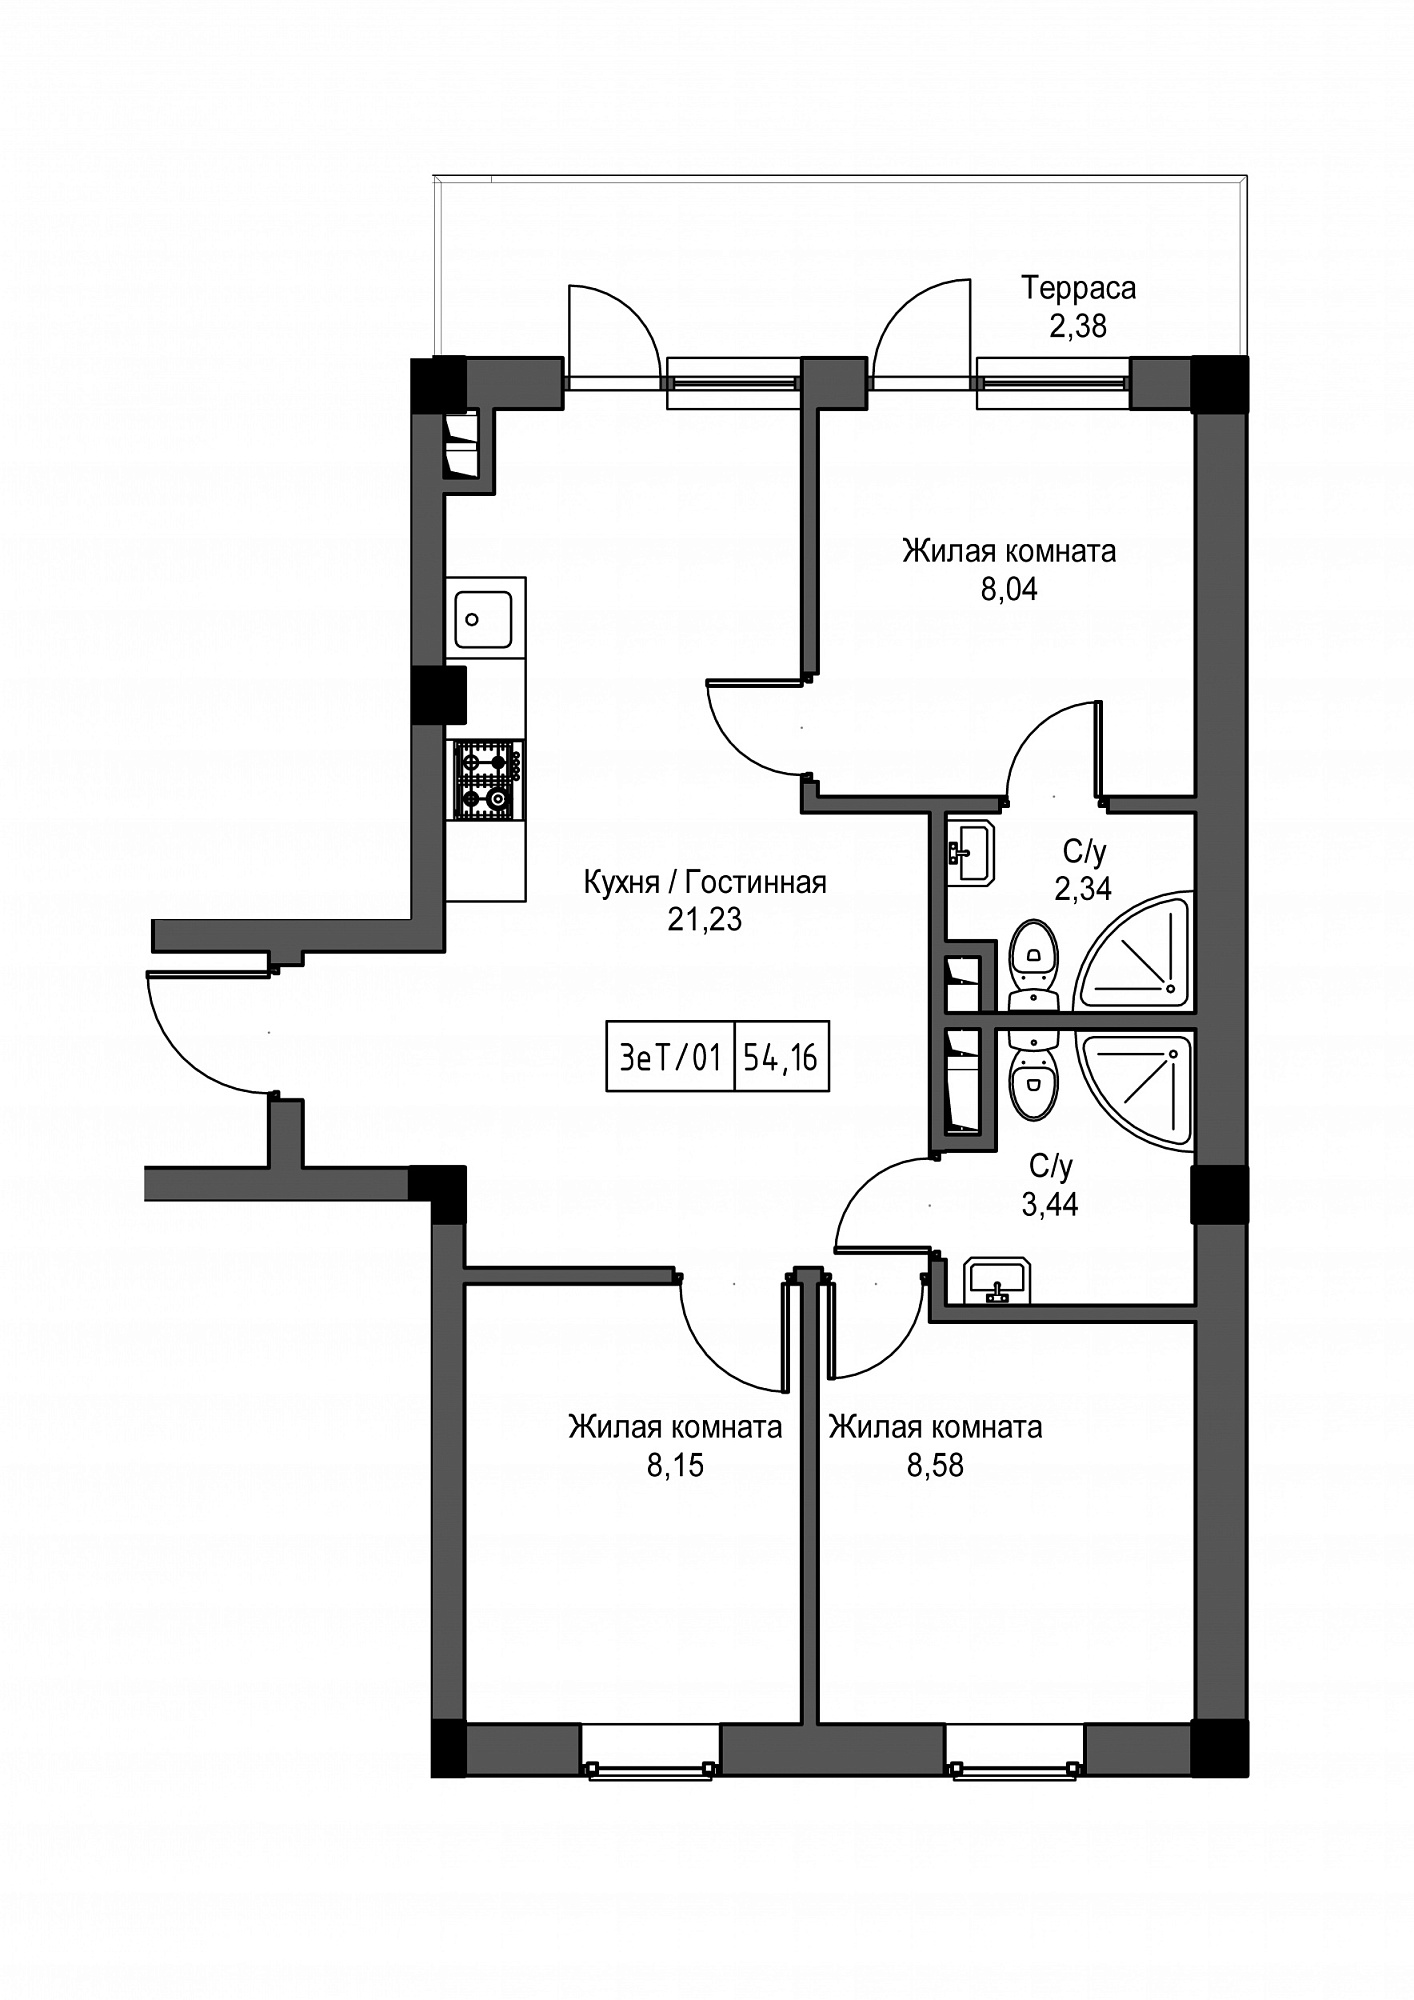 Планування 3-к квартира площею 54.16м2, UM-002-03/0014.